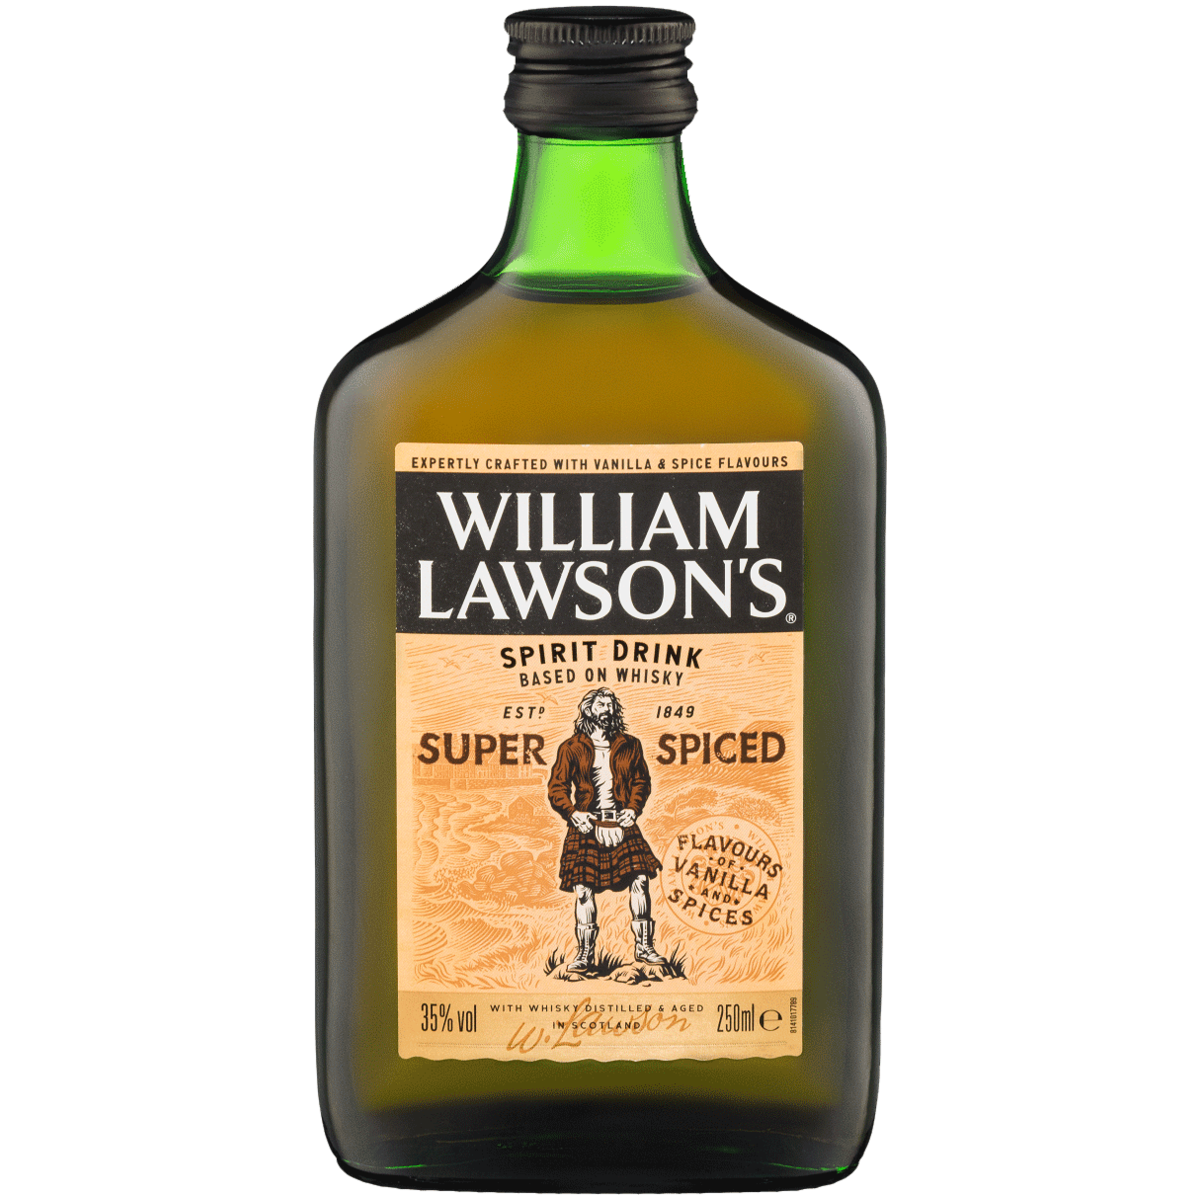 Super spiced. William Lawson Spiced 0.25. Виски William Lawson's 250ml. Виски Вильям 0.25. Виски Вильям Лоусон 0.25.